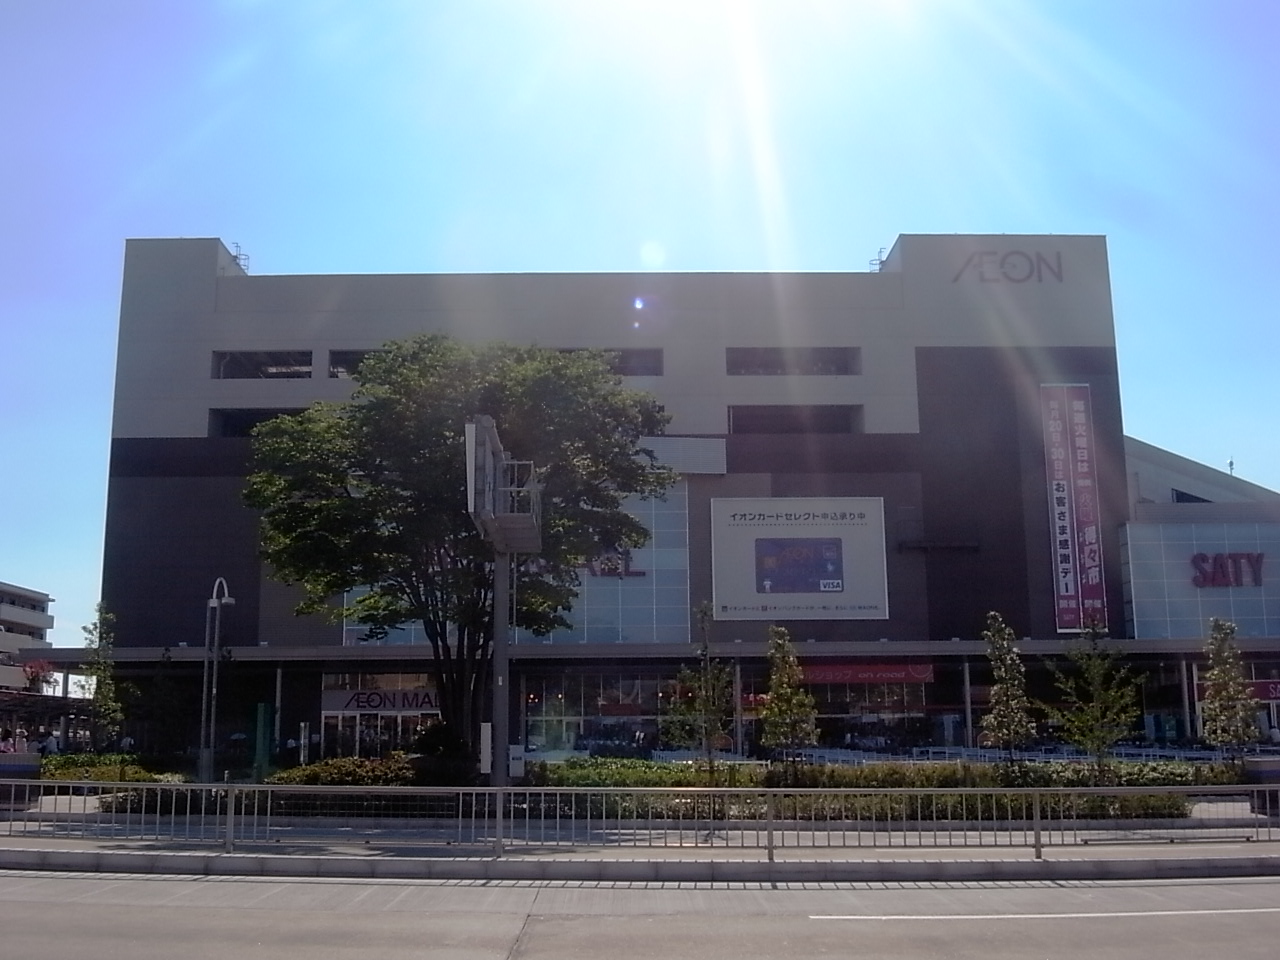 Shopping centre. 1800m to Aeon Mall Aratamabashi (shopping center)